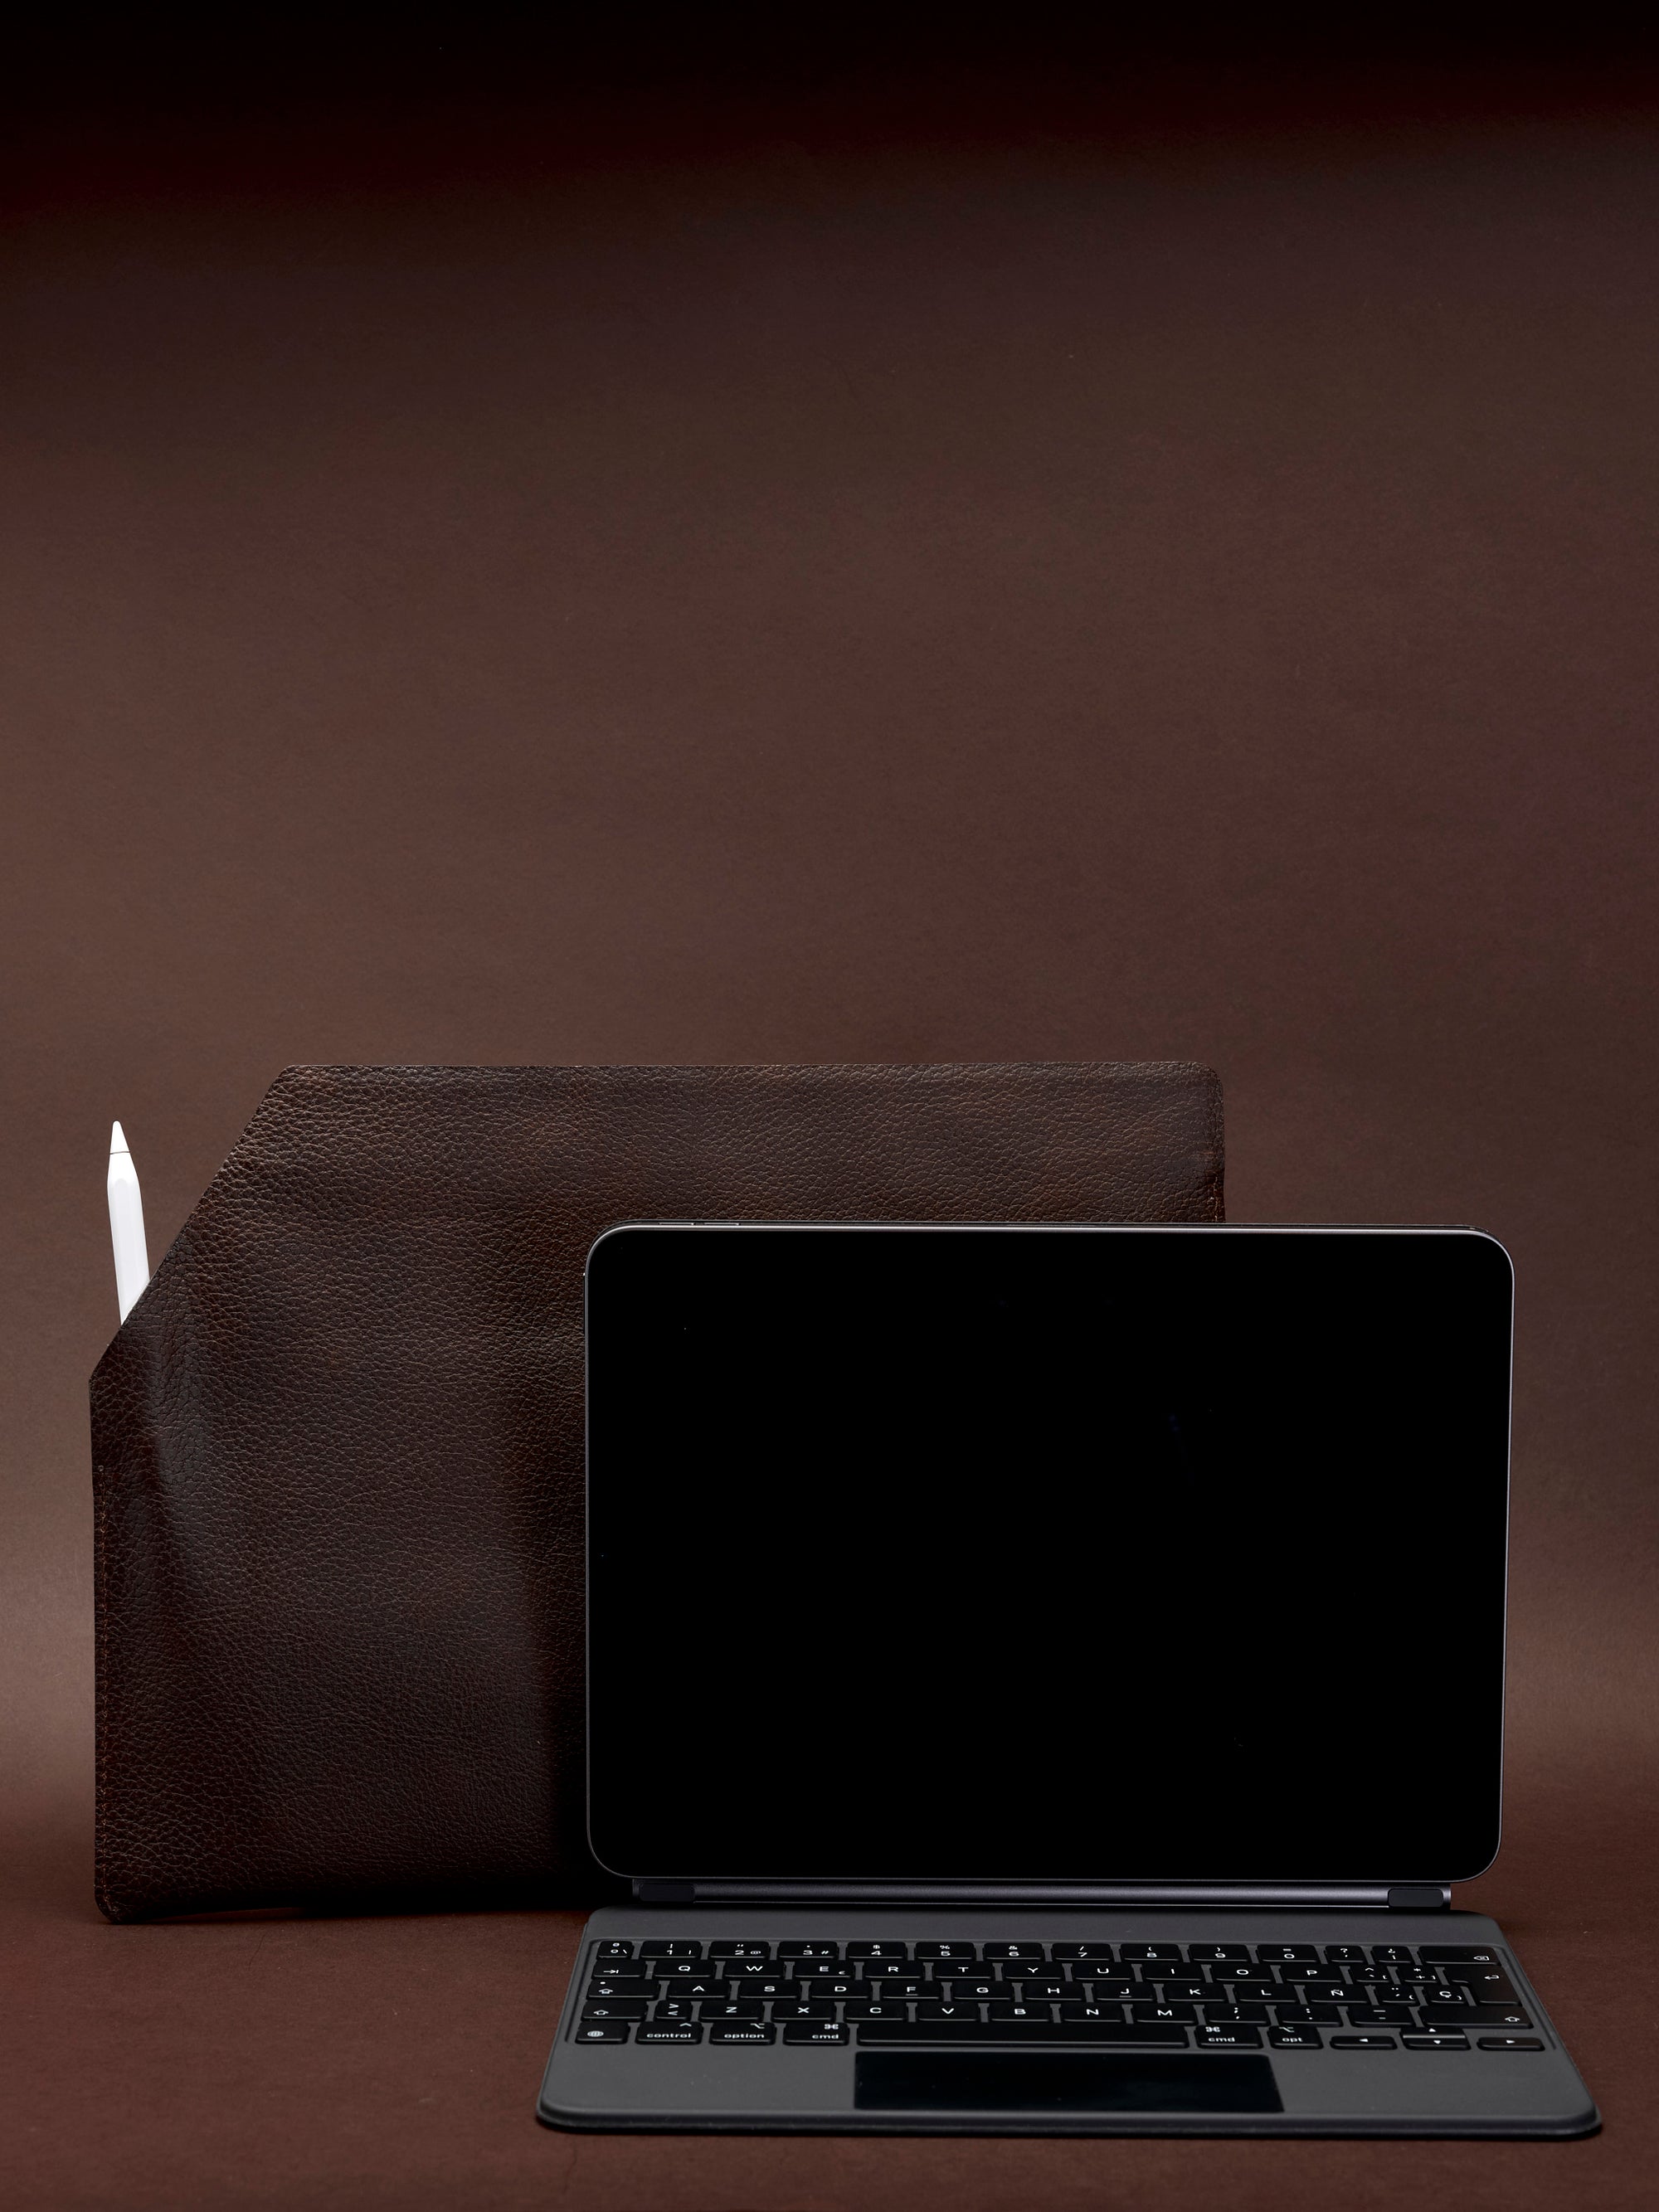 Smart Case. Draftsman 7 iPad Sleeve Dark Brown Color, iPad Pro 11-inch, iPad Pro 12.9-inch, M1 Chip by Capra Leather